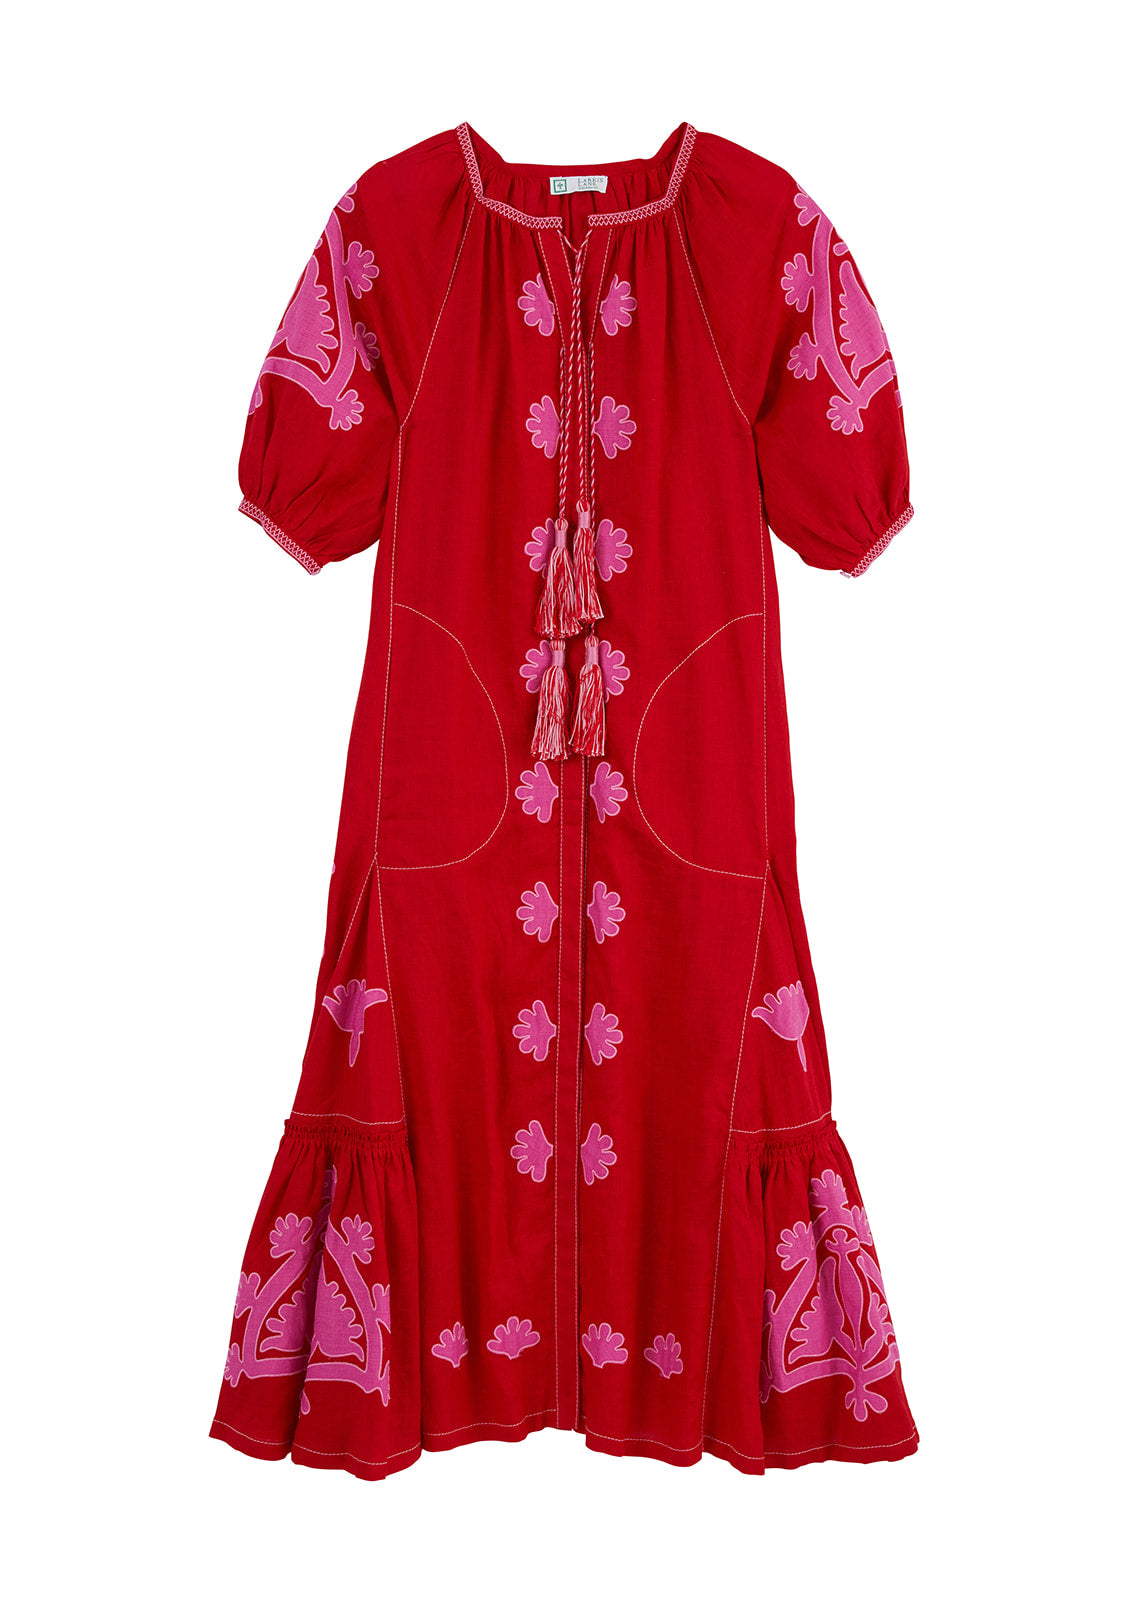 Matisse Embroidered Ukrainian Dress/ Caftan - Red, Pink by Larkin Lane